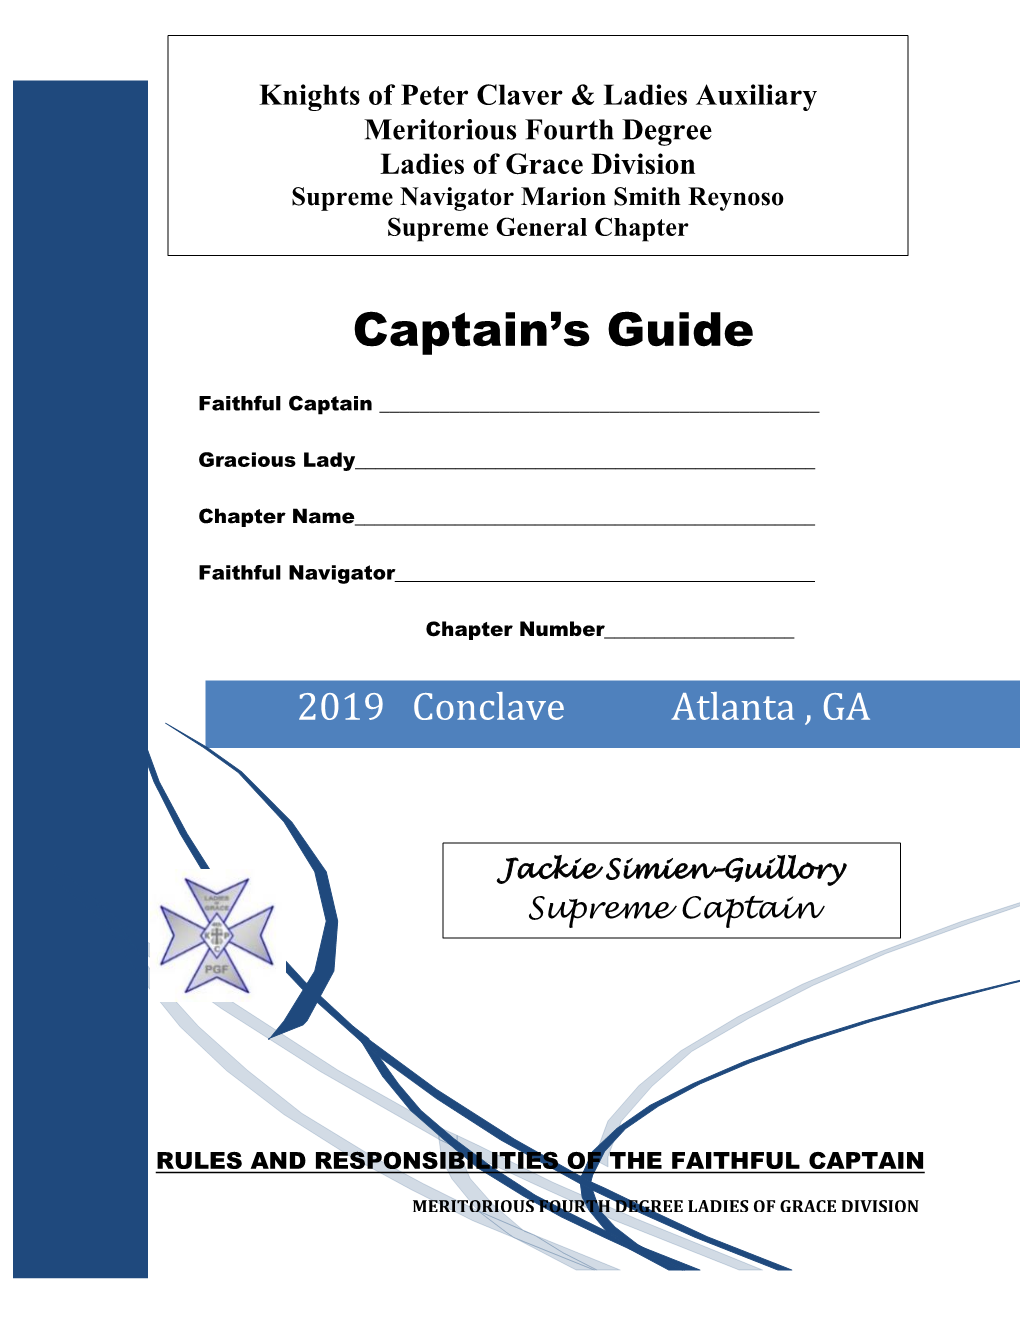 Captain's Guide